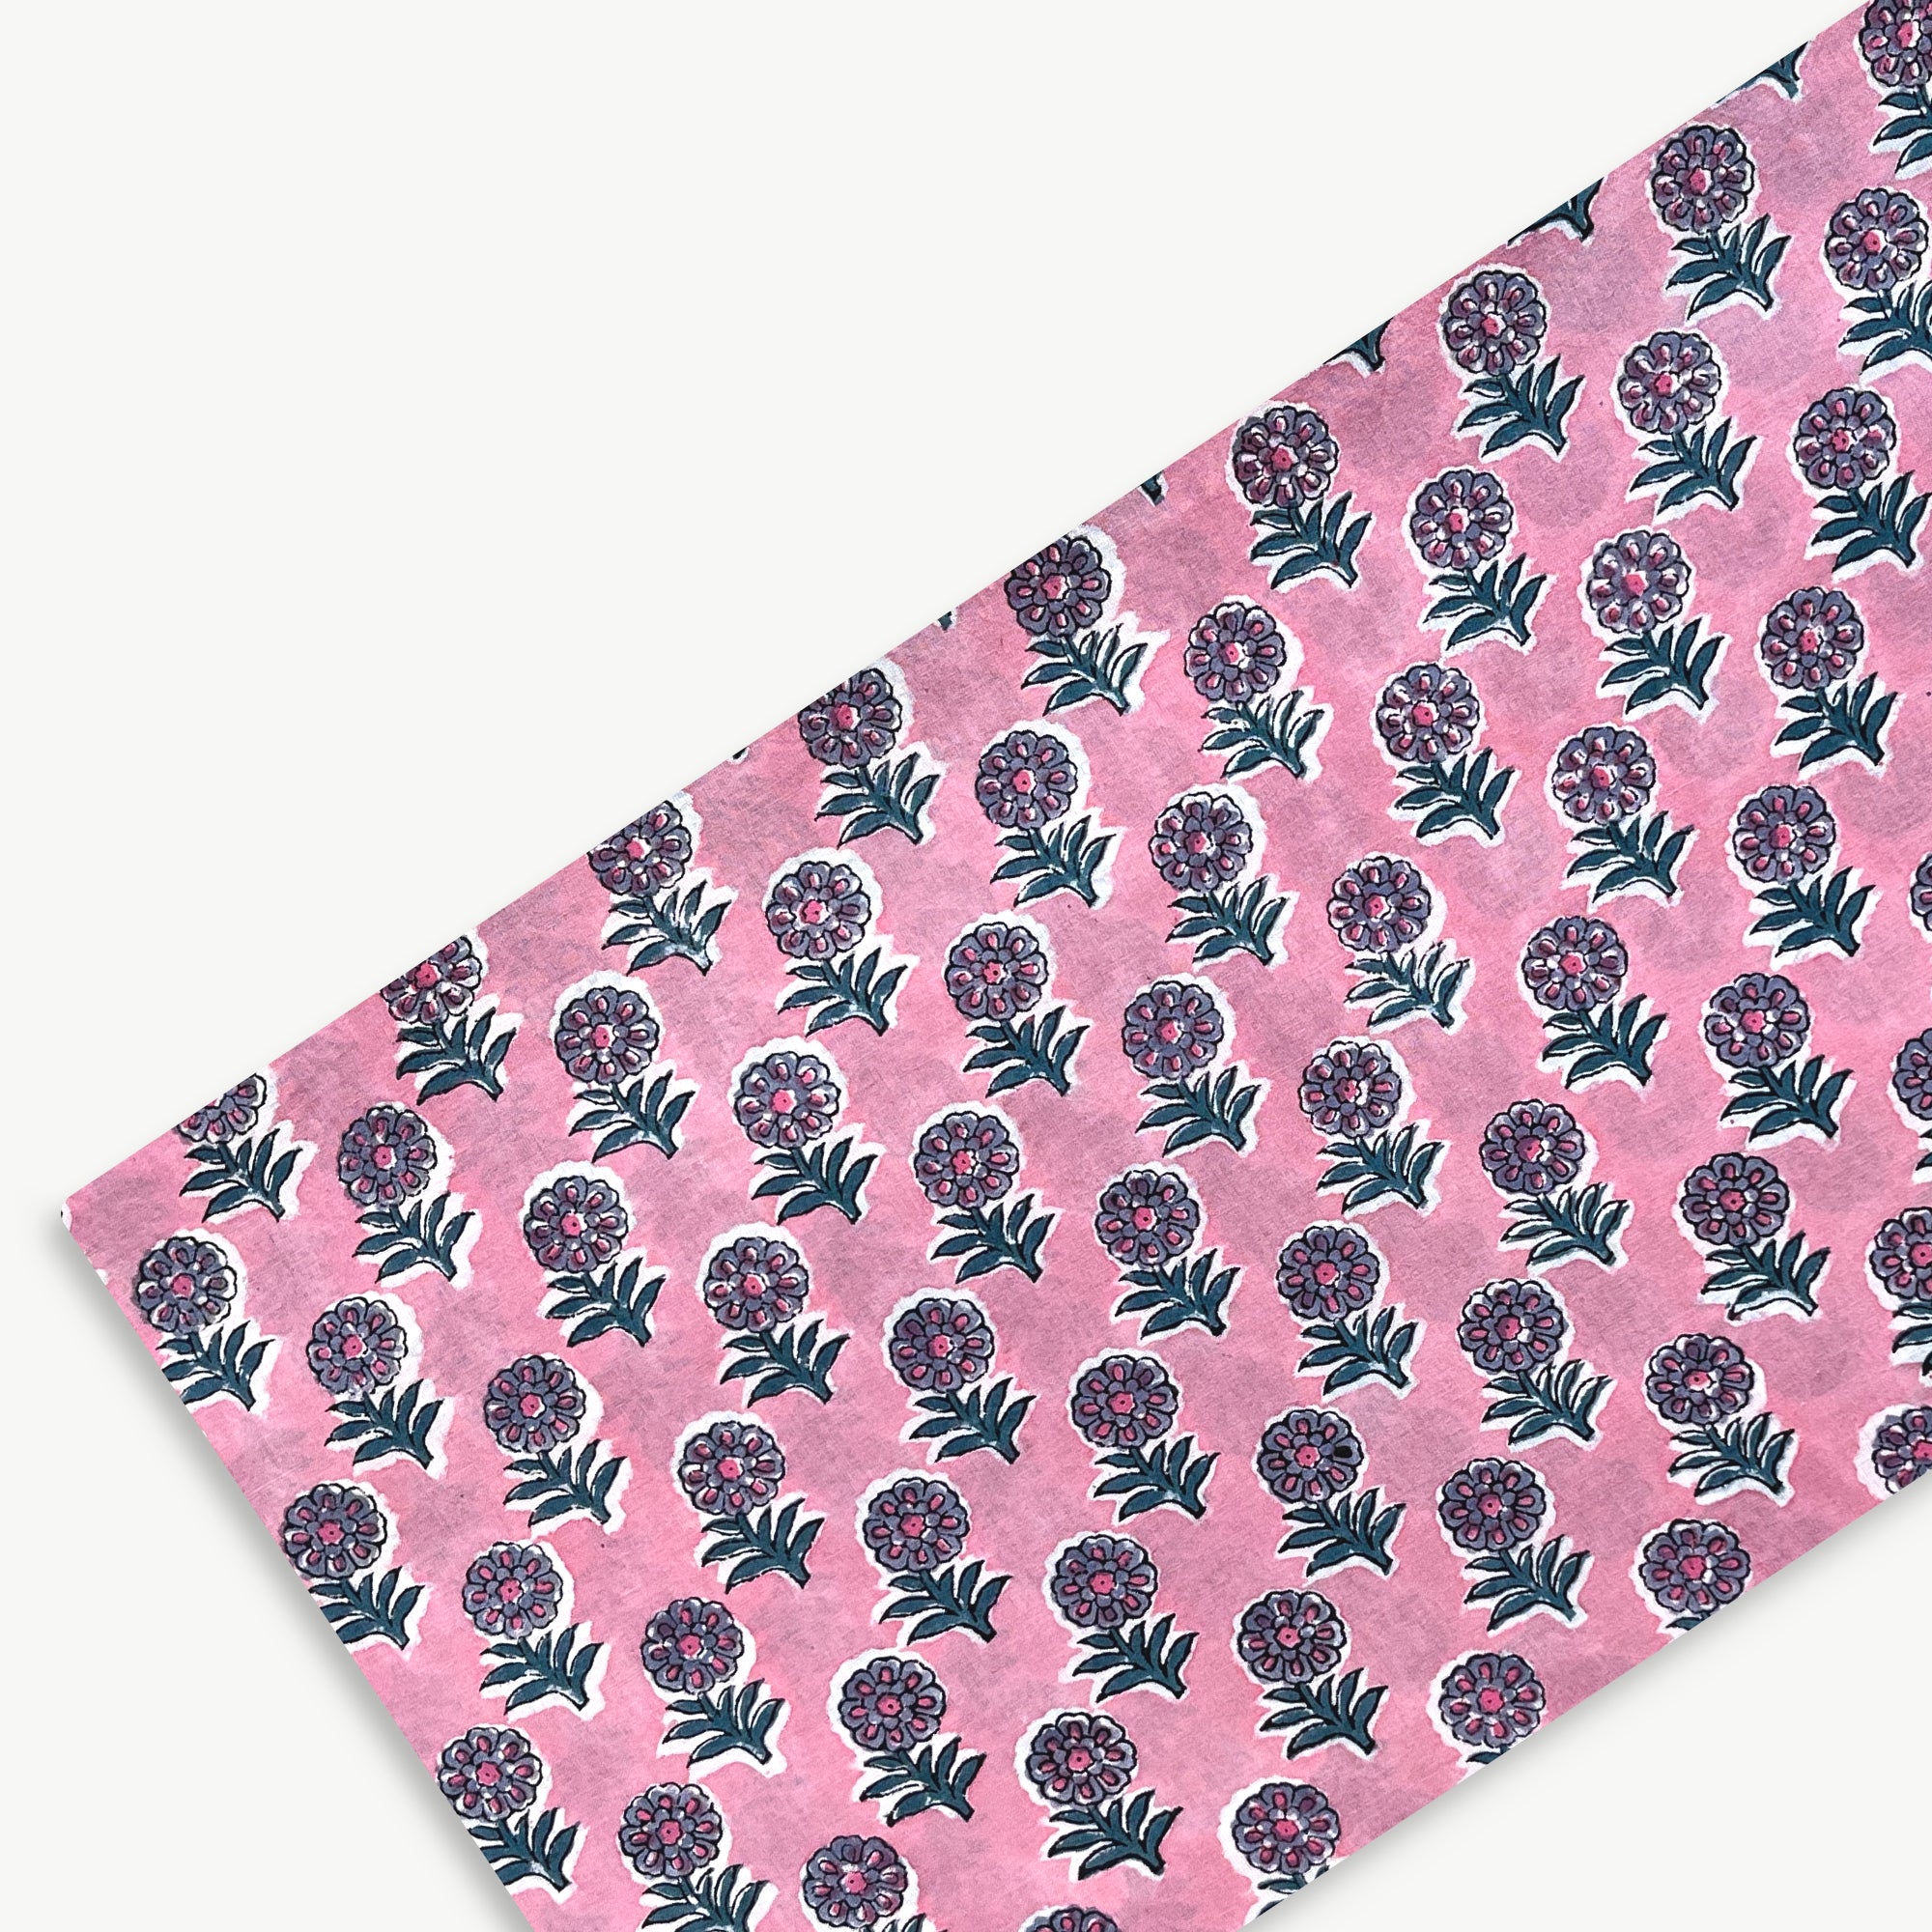 Light Pink Flower Butti Rapid Hand Block Printed Cotton Fabric